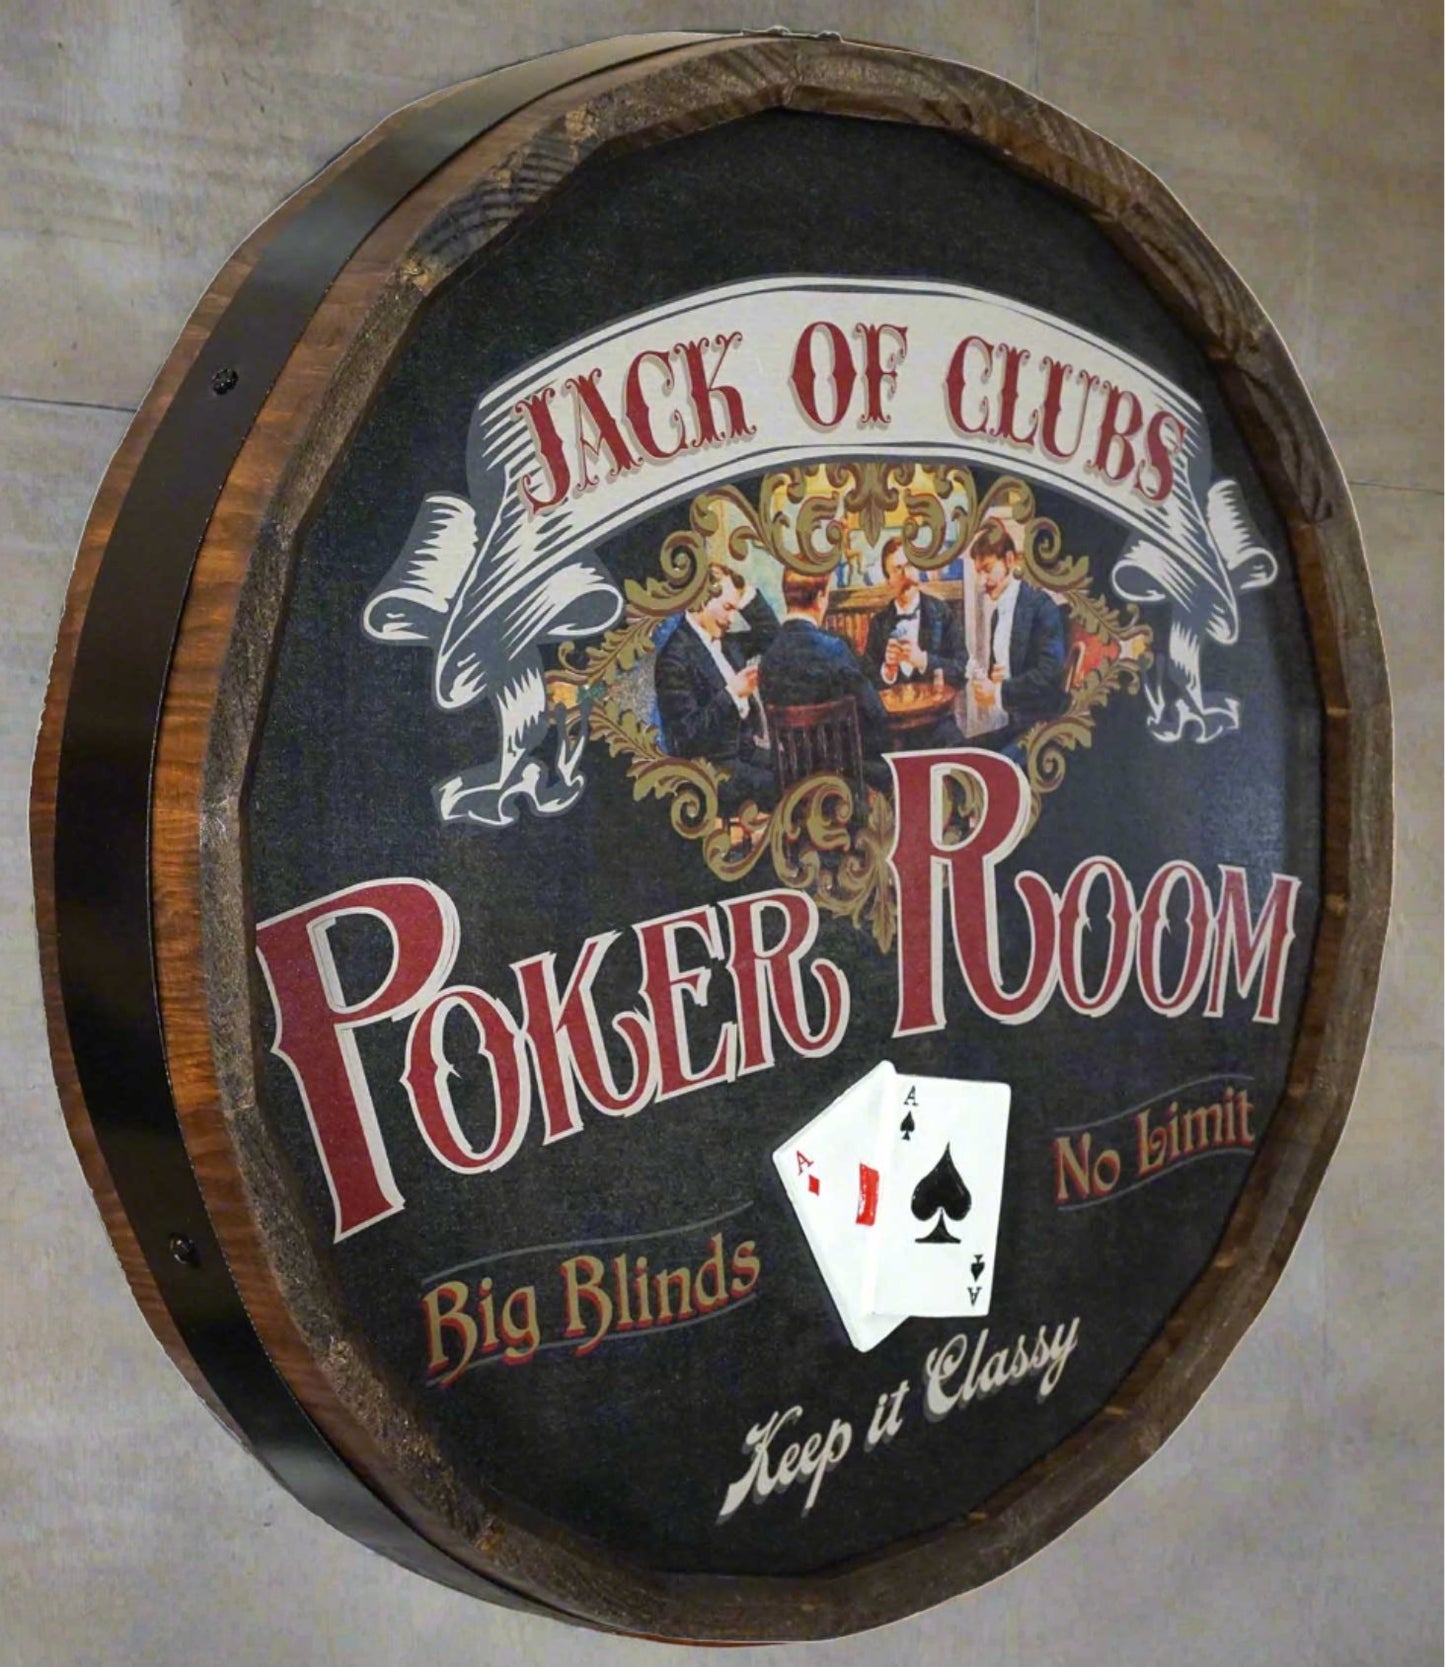 Personalized Full Color Poker Quarter Barrel Sign